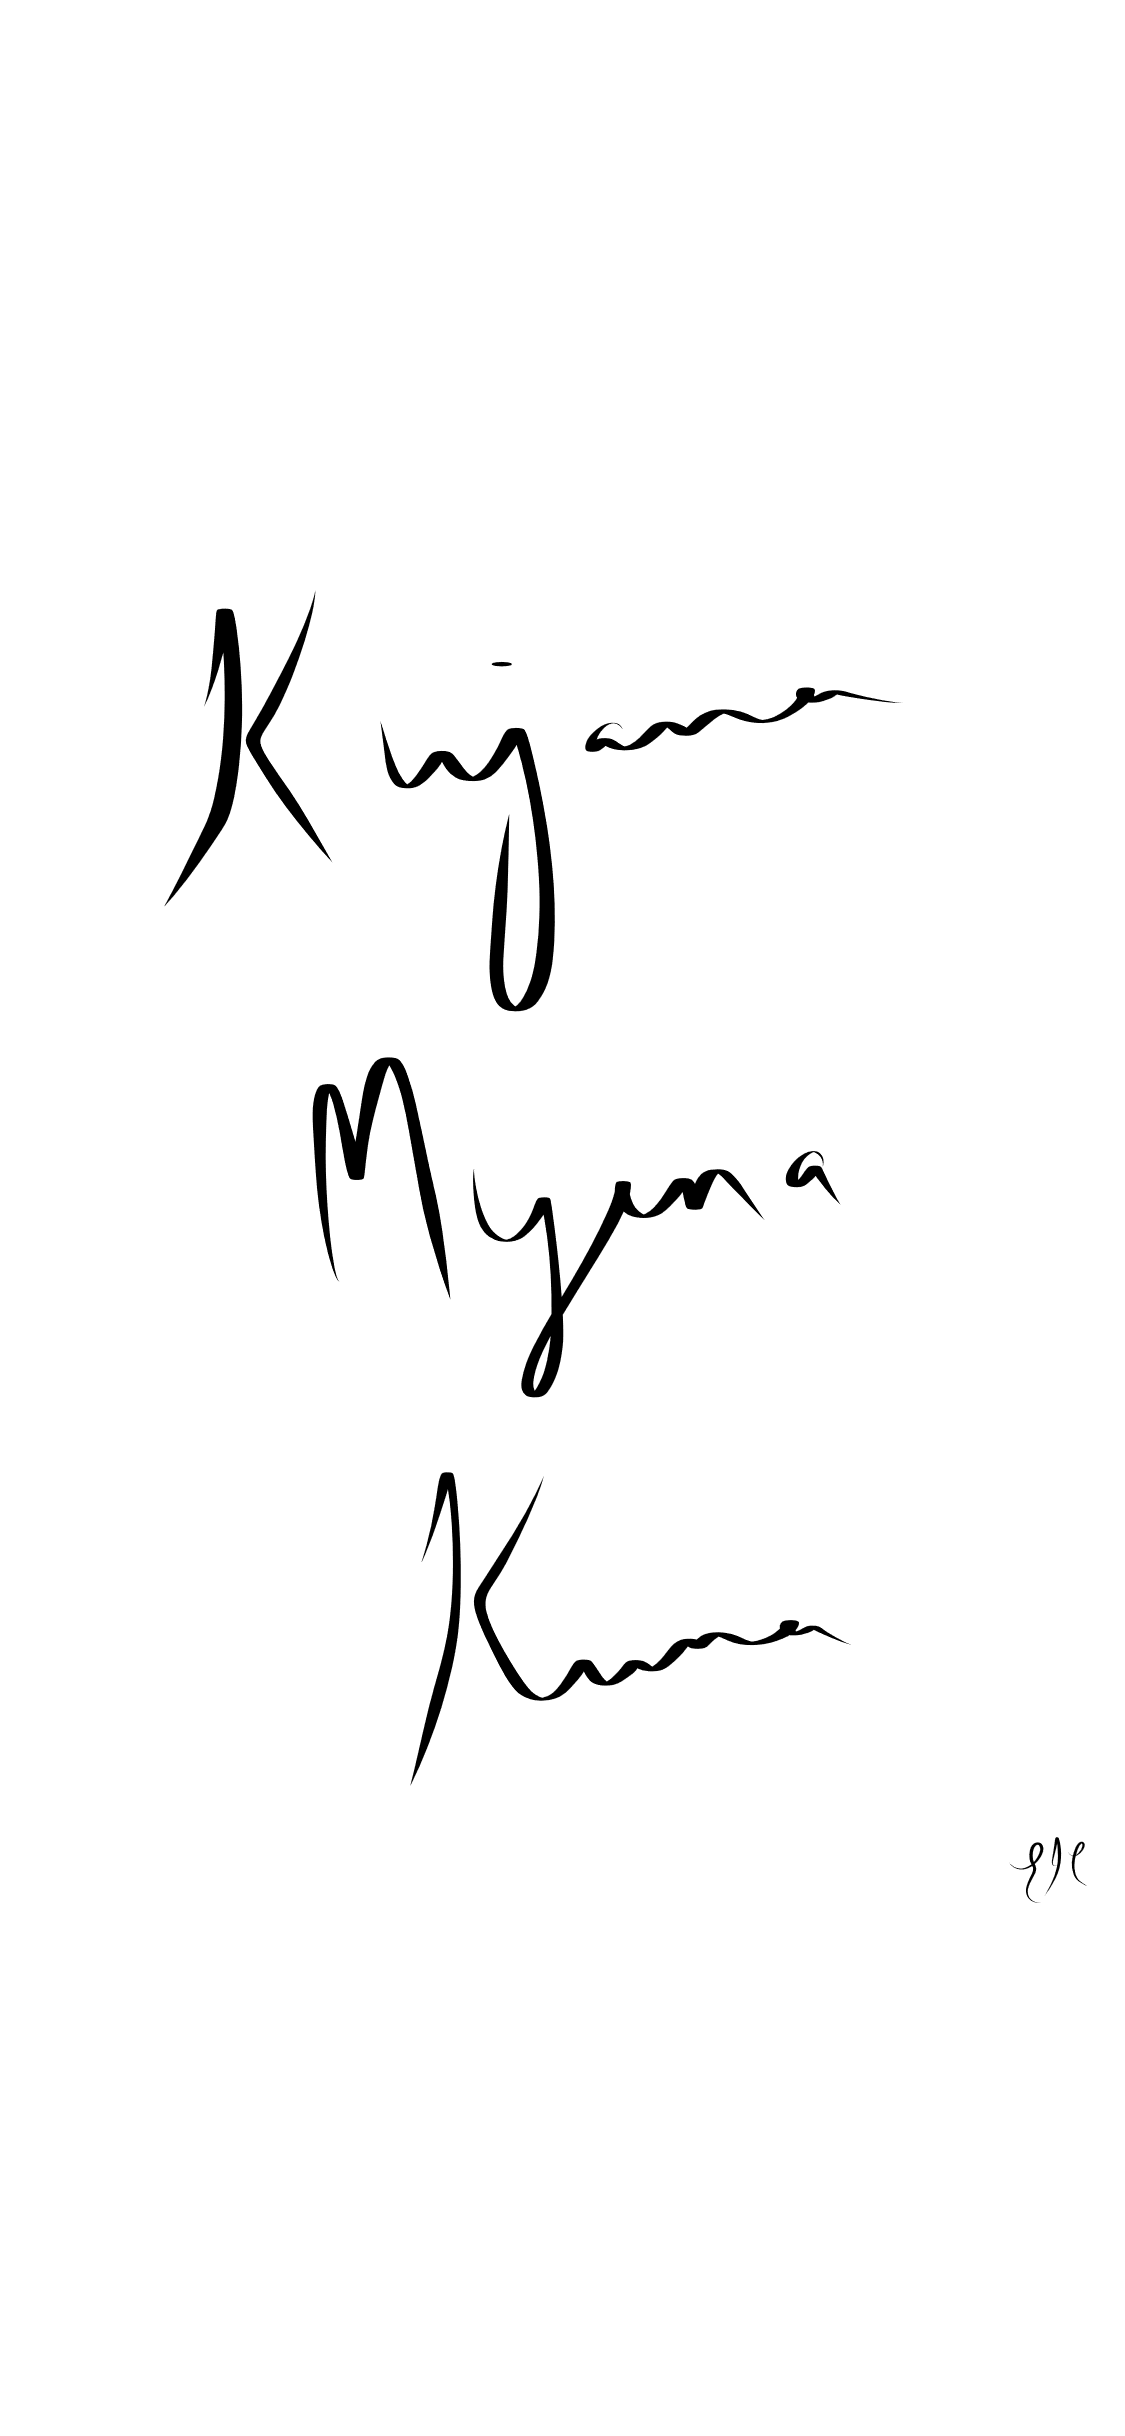 kujana myena kuna spiritual tongue free phone background in calligraphy